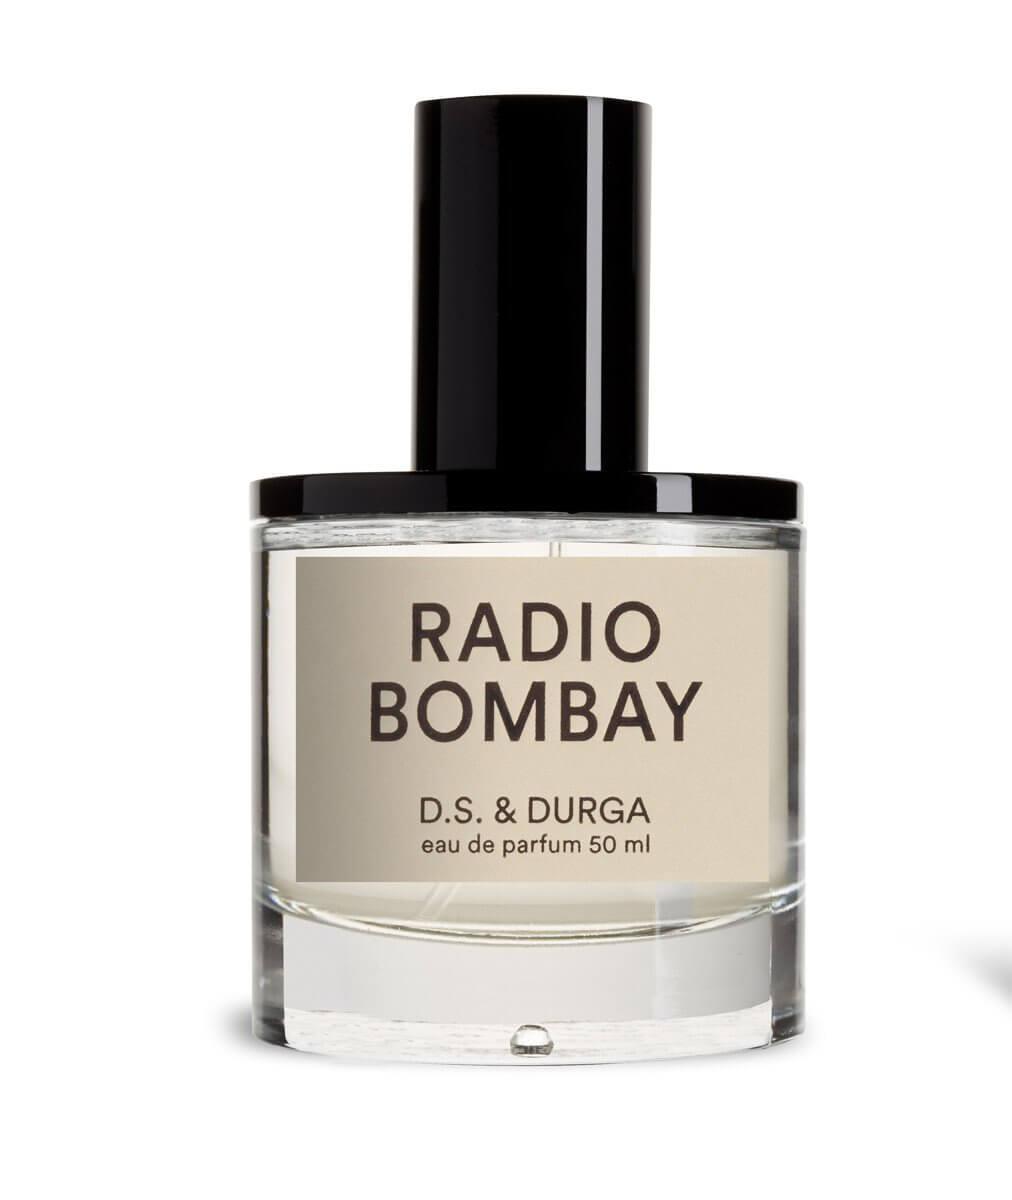 Radio Bombay by DS and Durga at Indigo - Indigo Perfumery